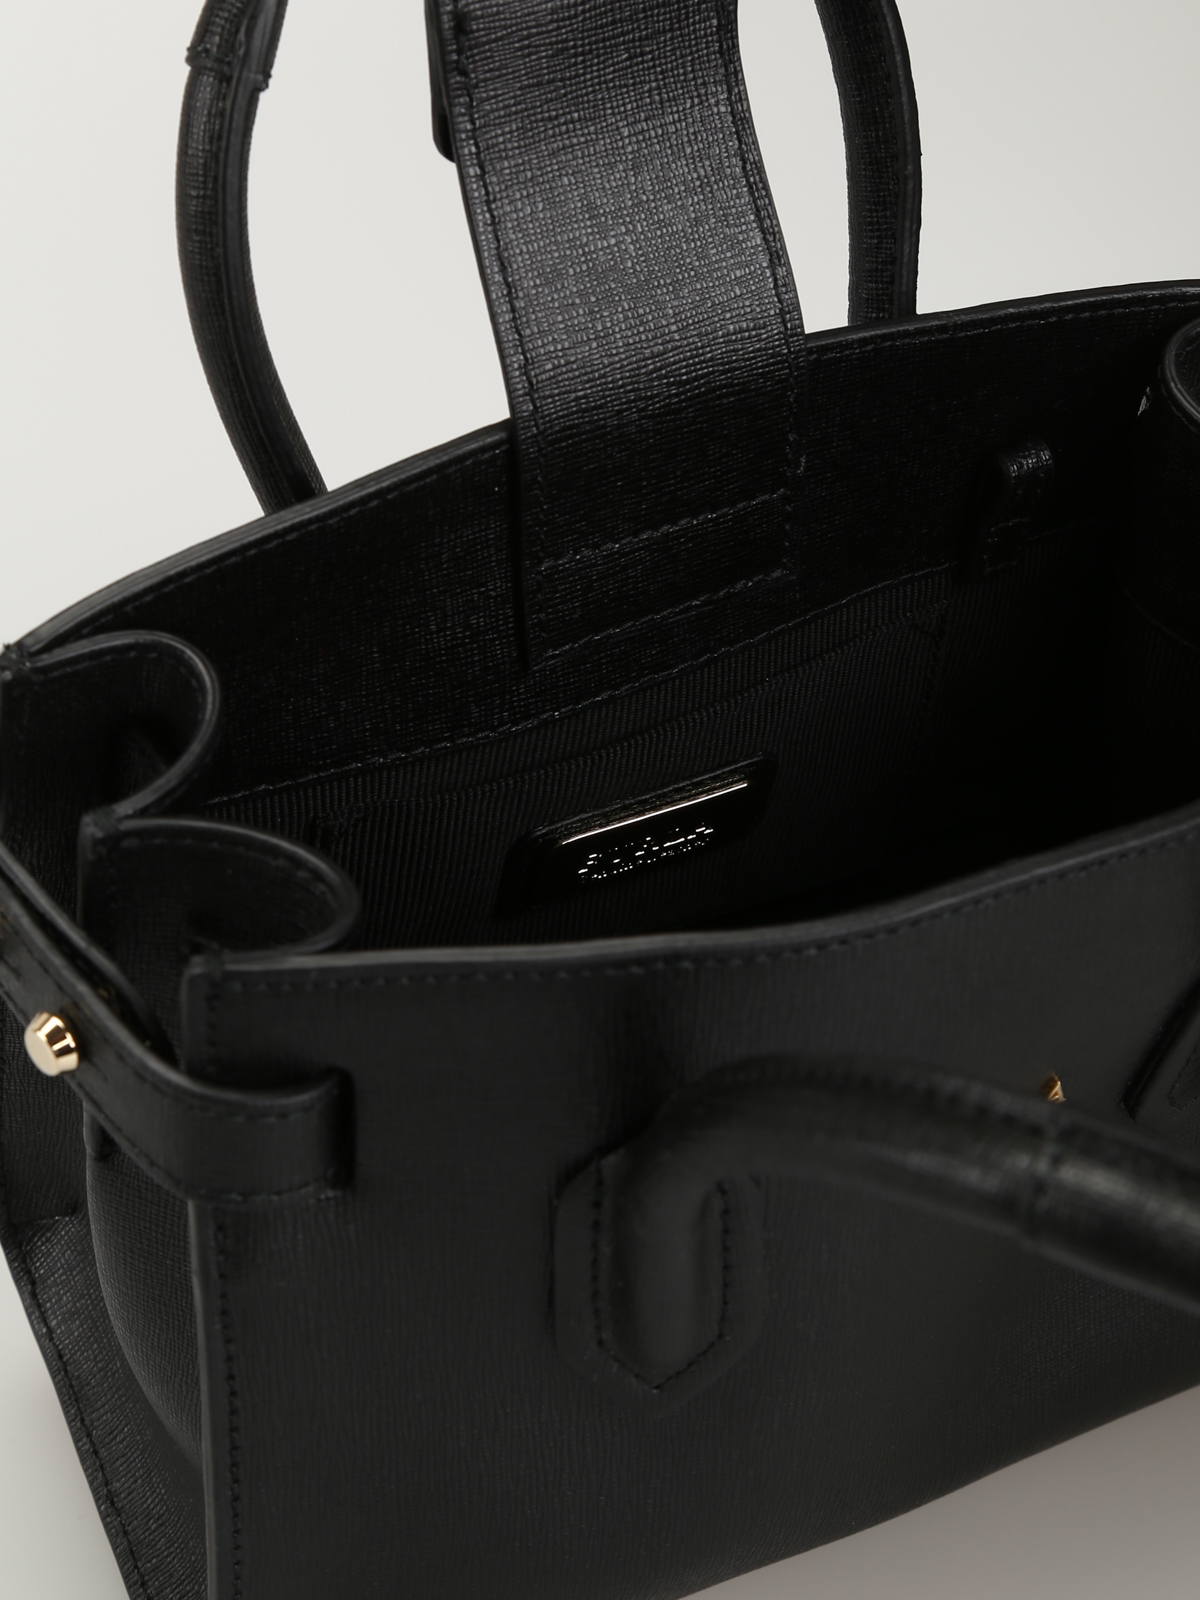 Furla - Pin Mini tote style black cross body bag - cross body bags - 978752